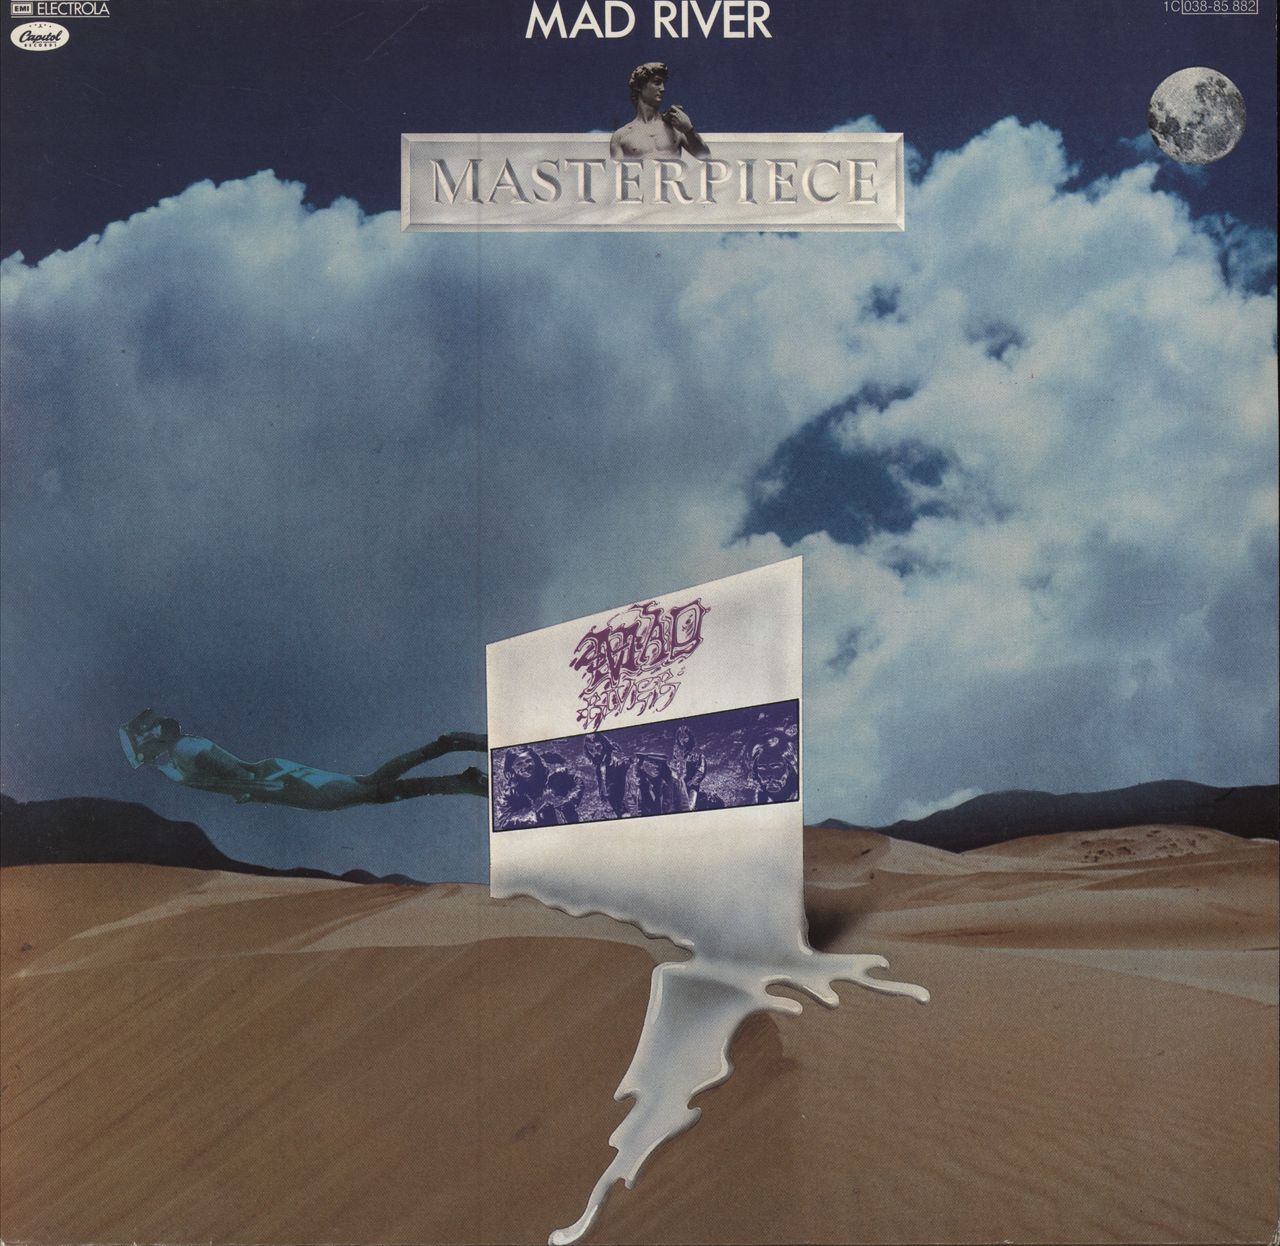 Mad River Mad River German vinyl LP album (LP record) 1C038-85882